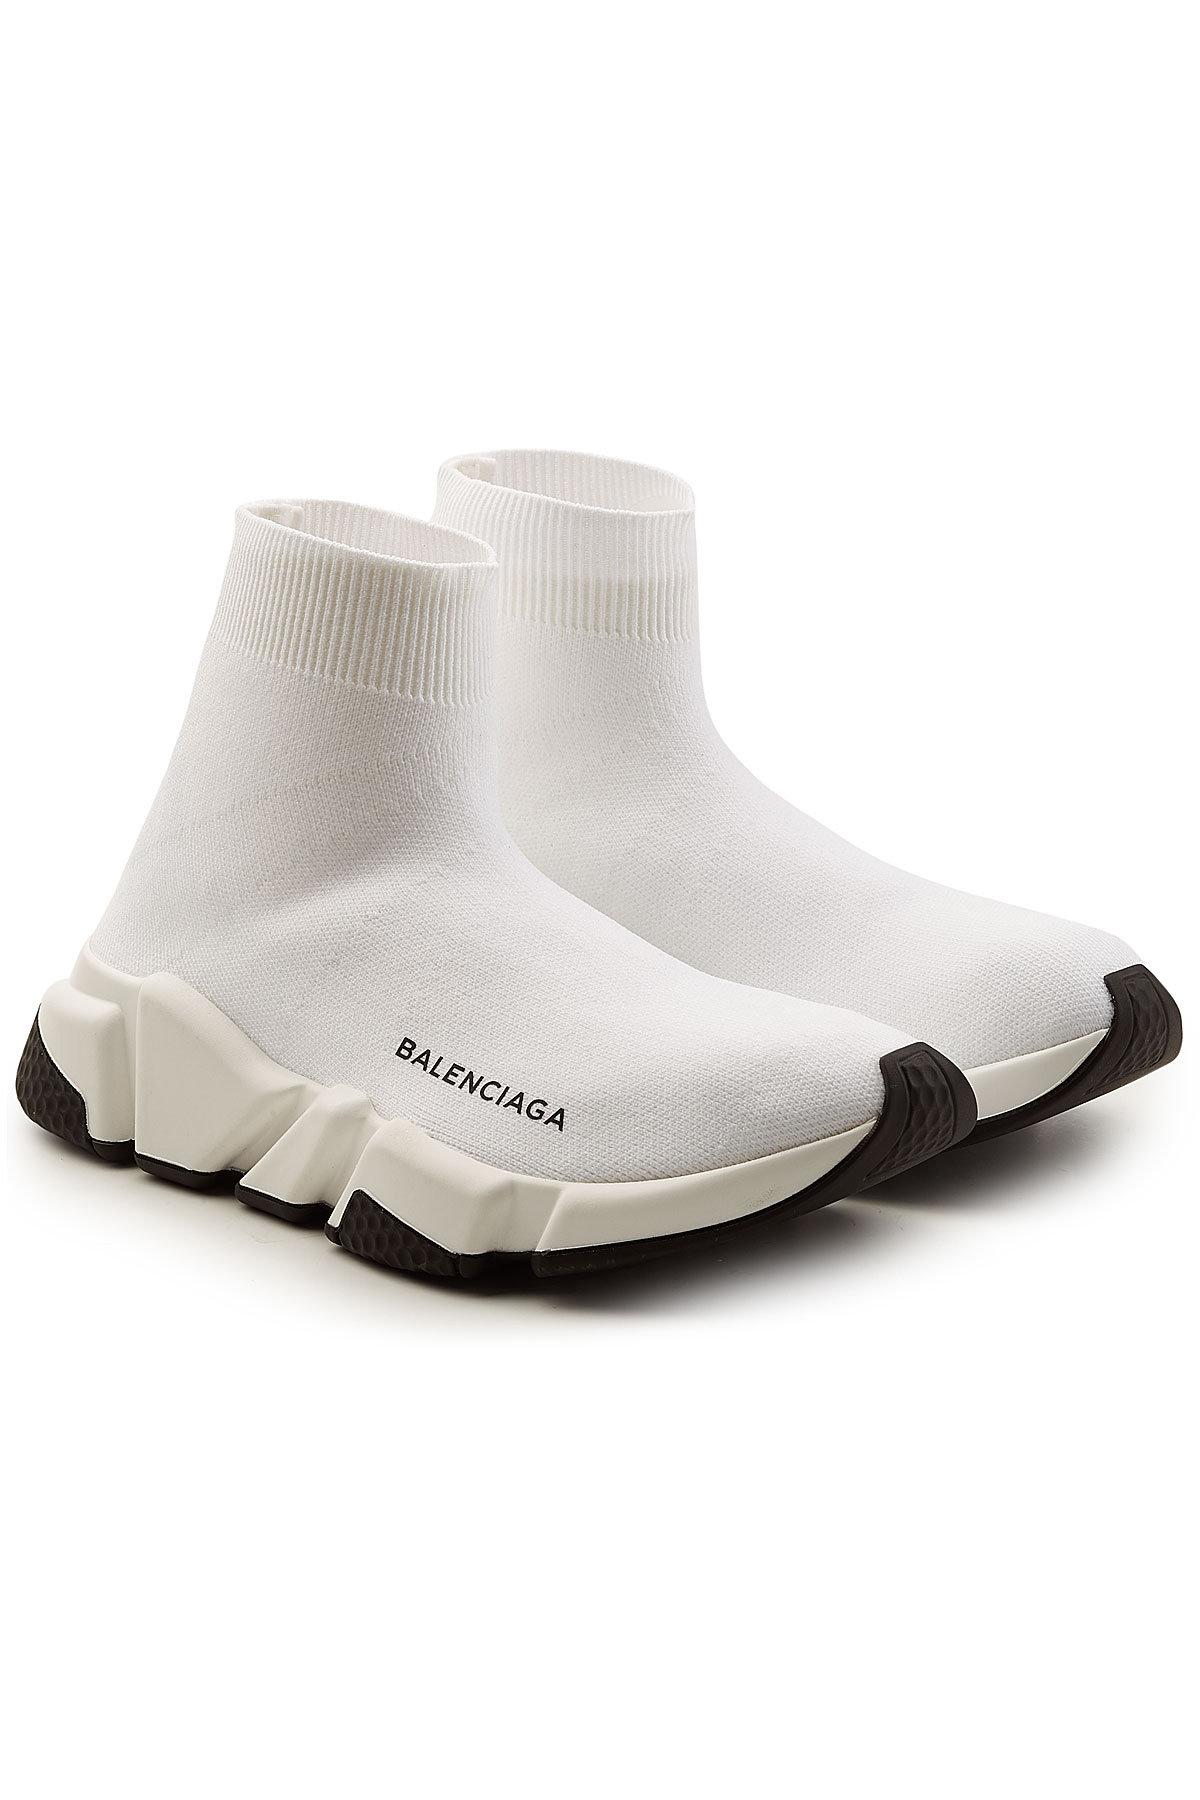 balenciaga white sock sneakers